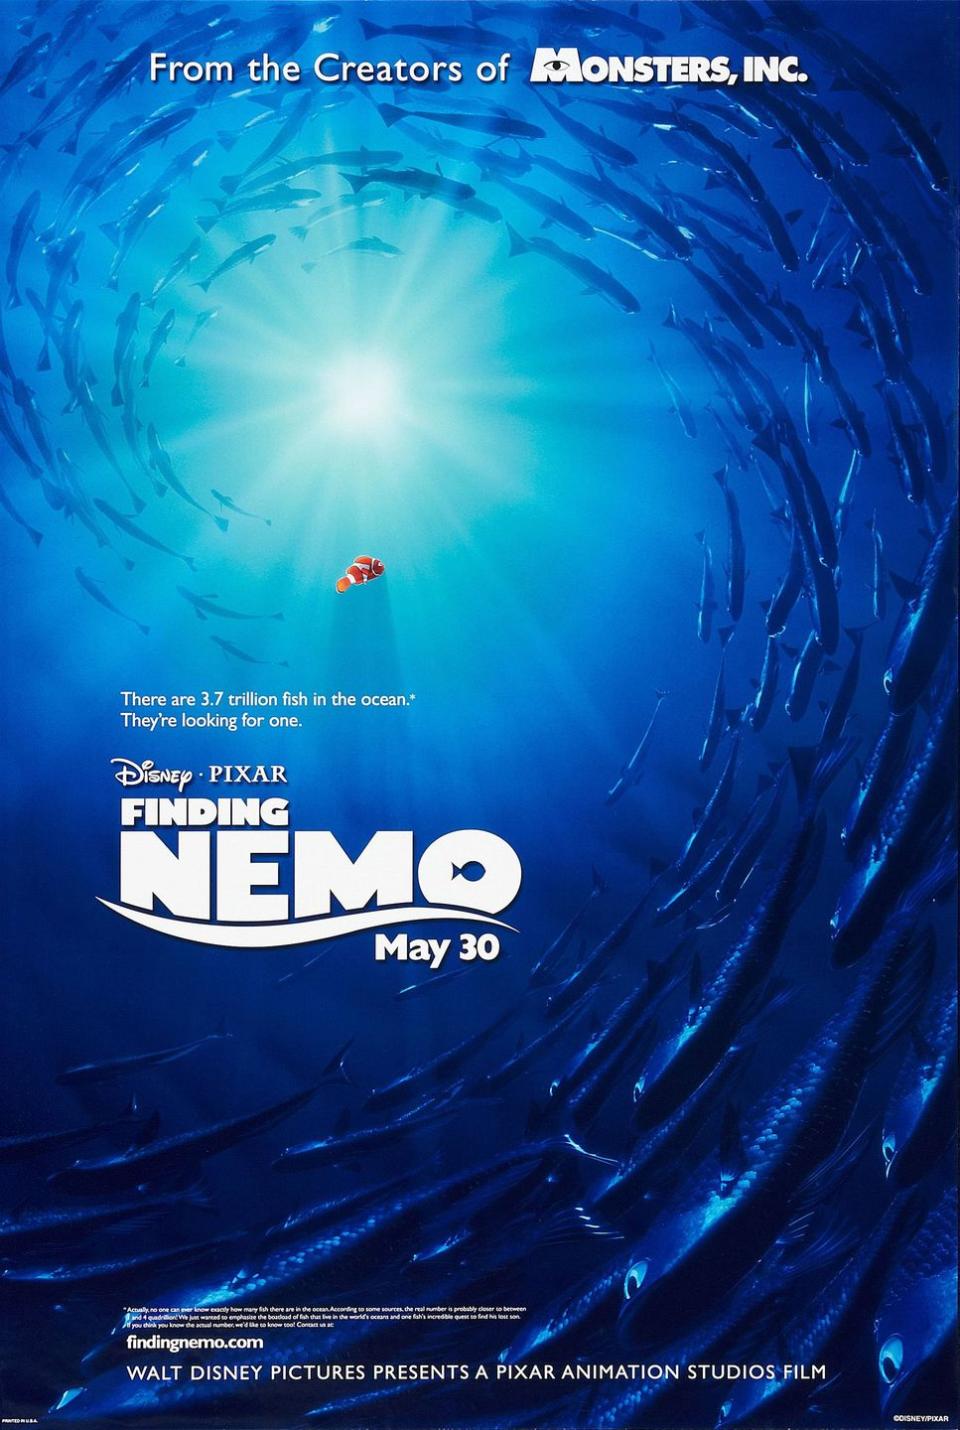 5) Finding Nemo (2003)